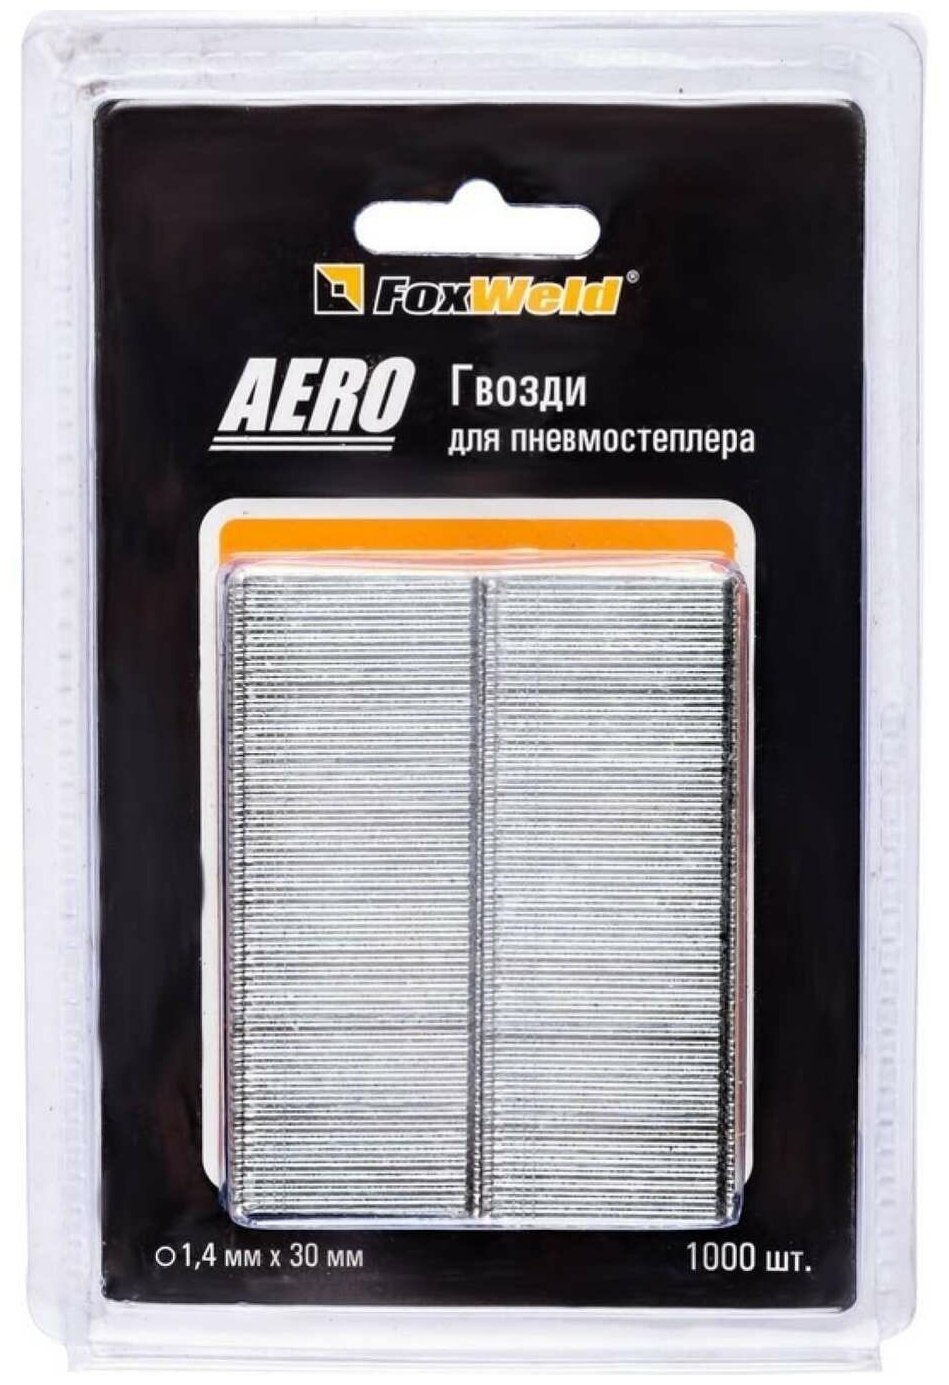 Foxweld Aero Гвозди для пневмостеплера 1,4х30мм 1000шт. 5755 - фотография № 9